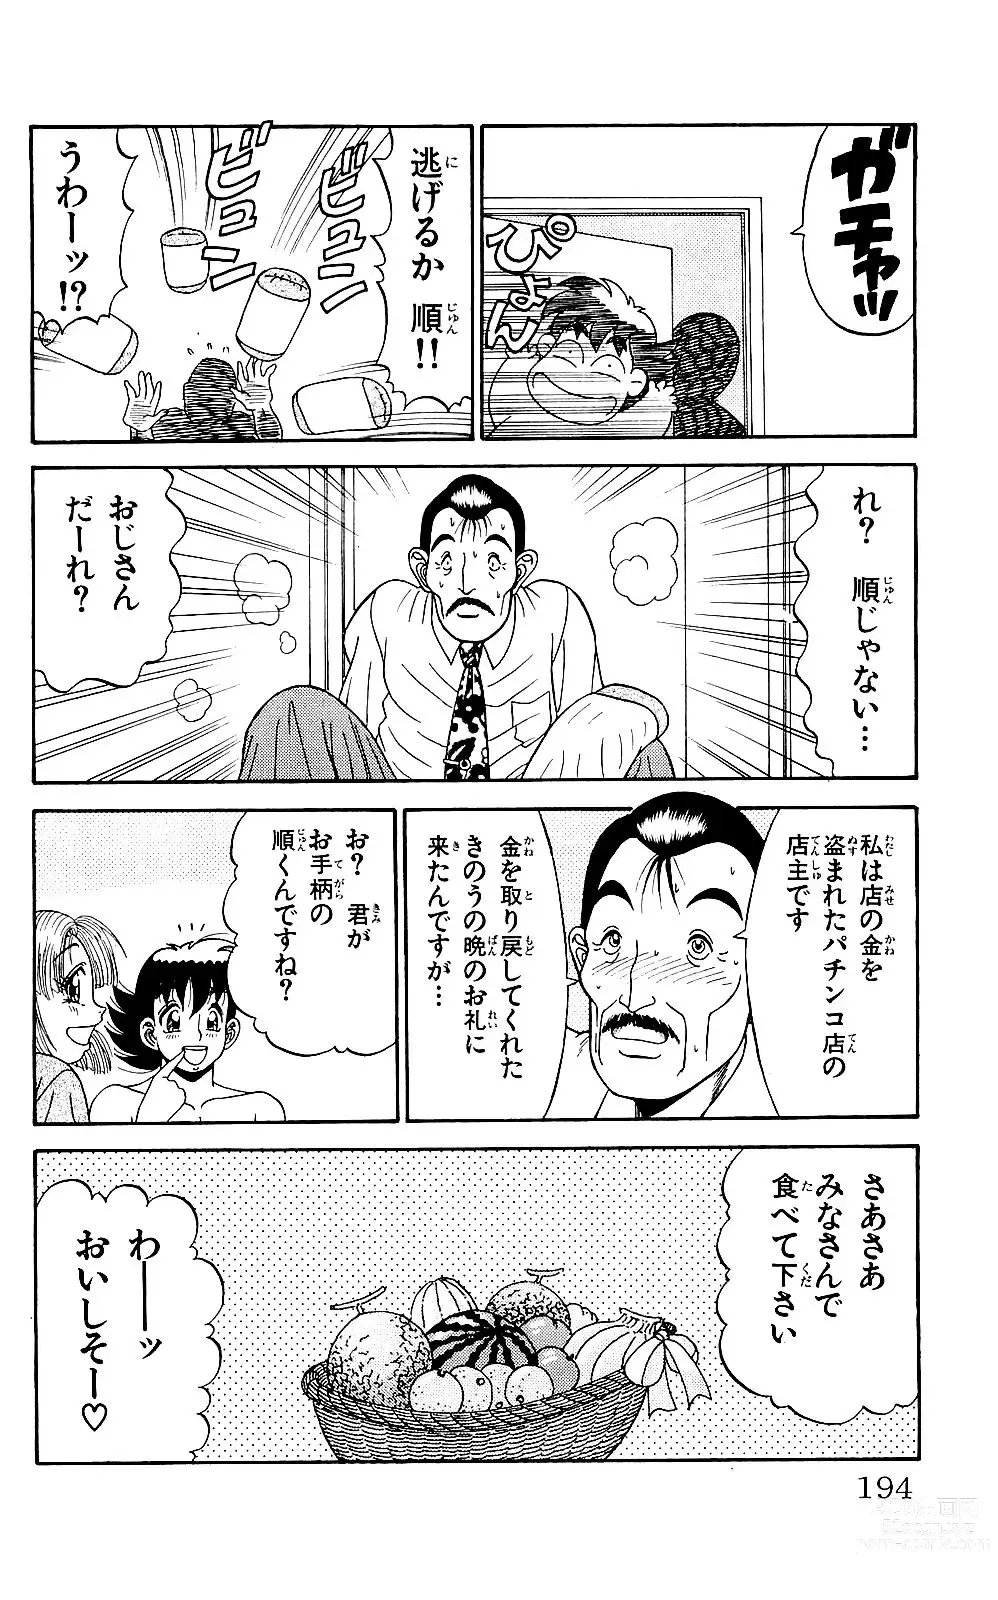 Page 192 of manga Orette Piyoritan 05